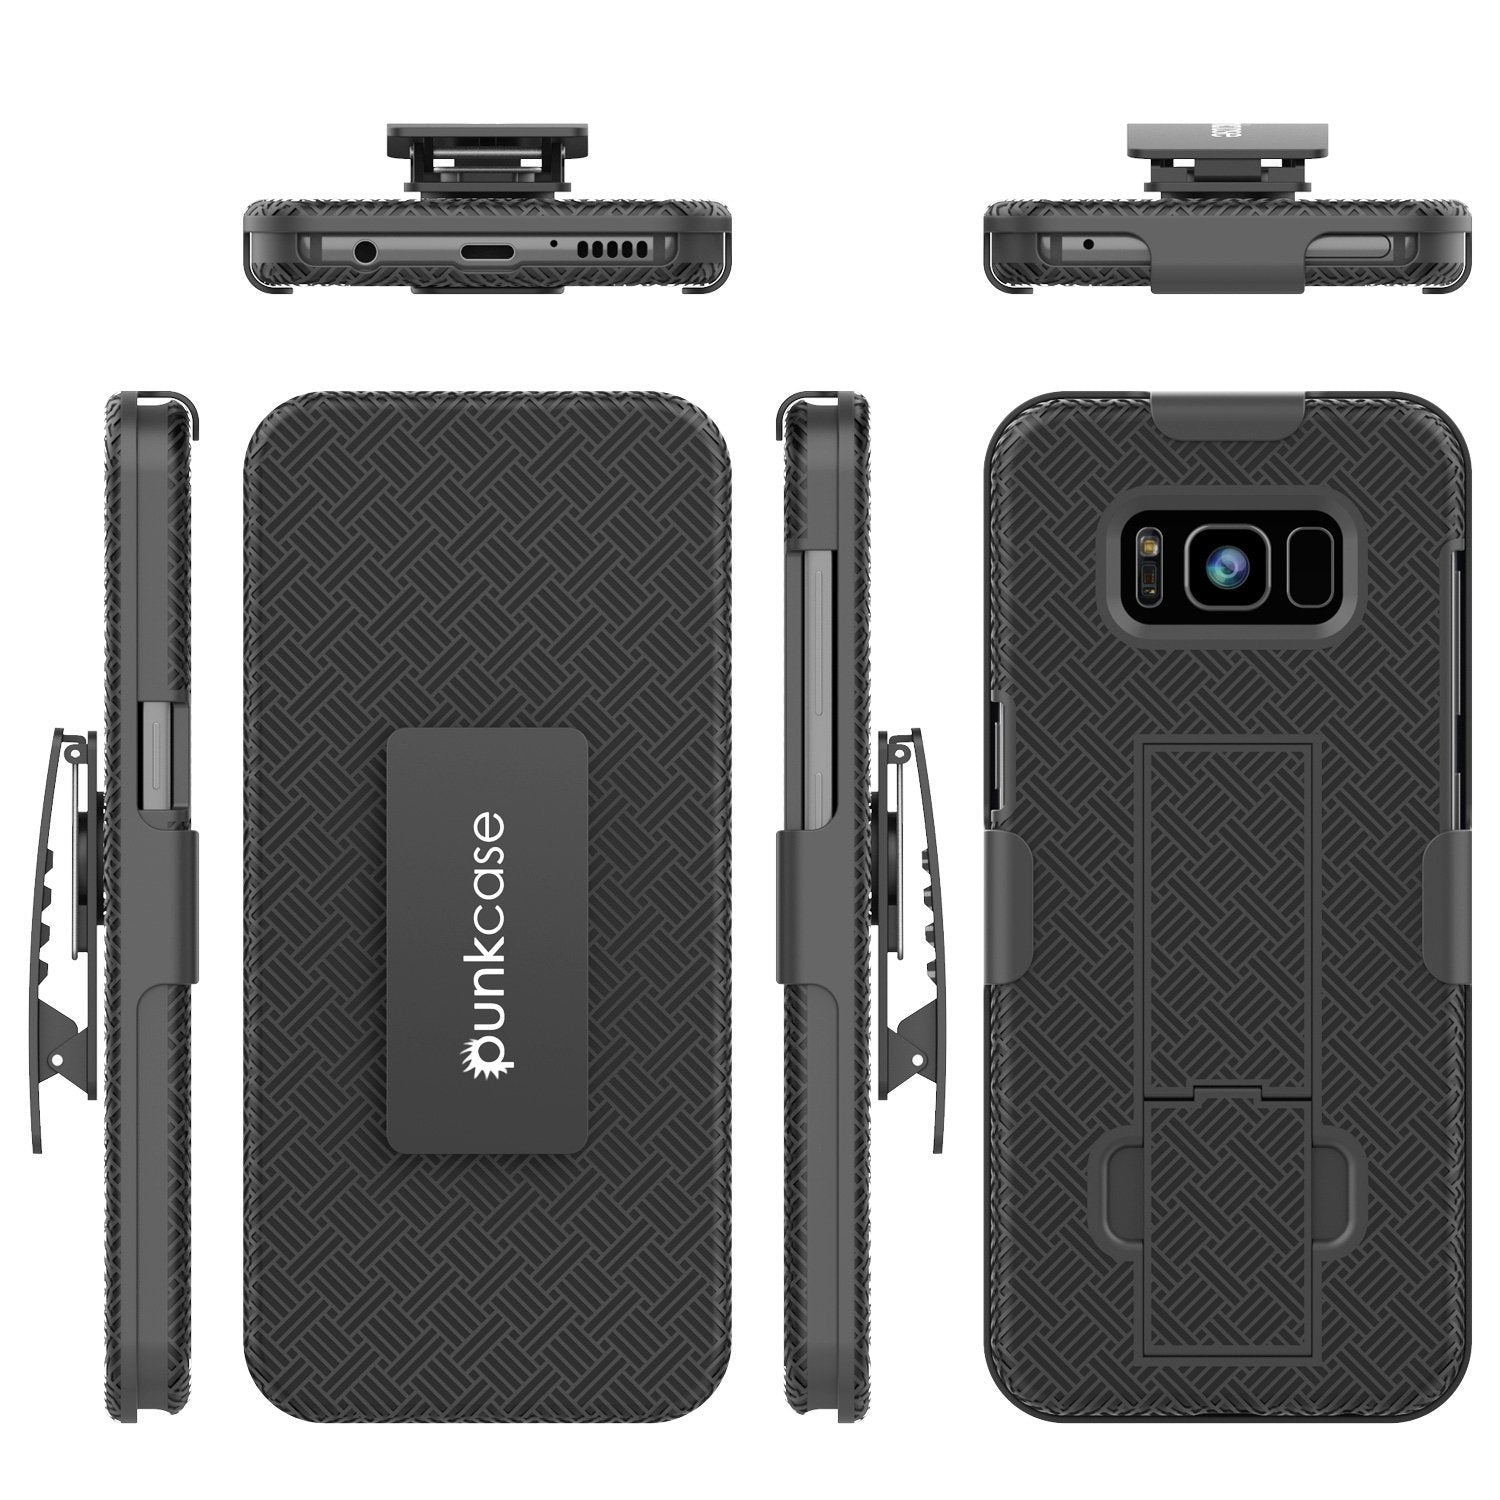 Punkcase Galaxy S8 Plus Case, Holster Belt Clip & Kickstand [Black]